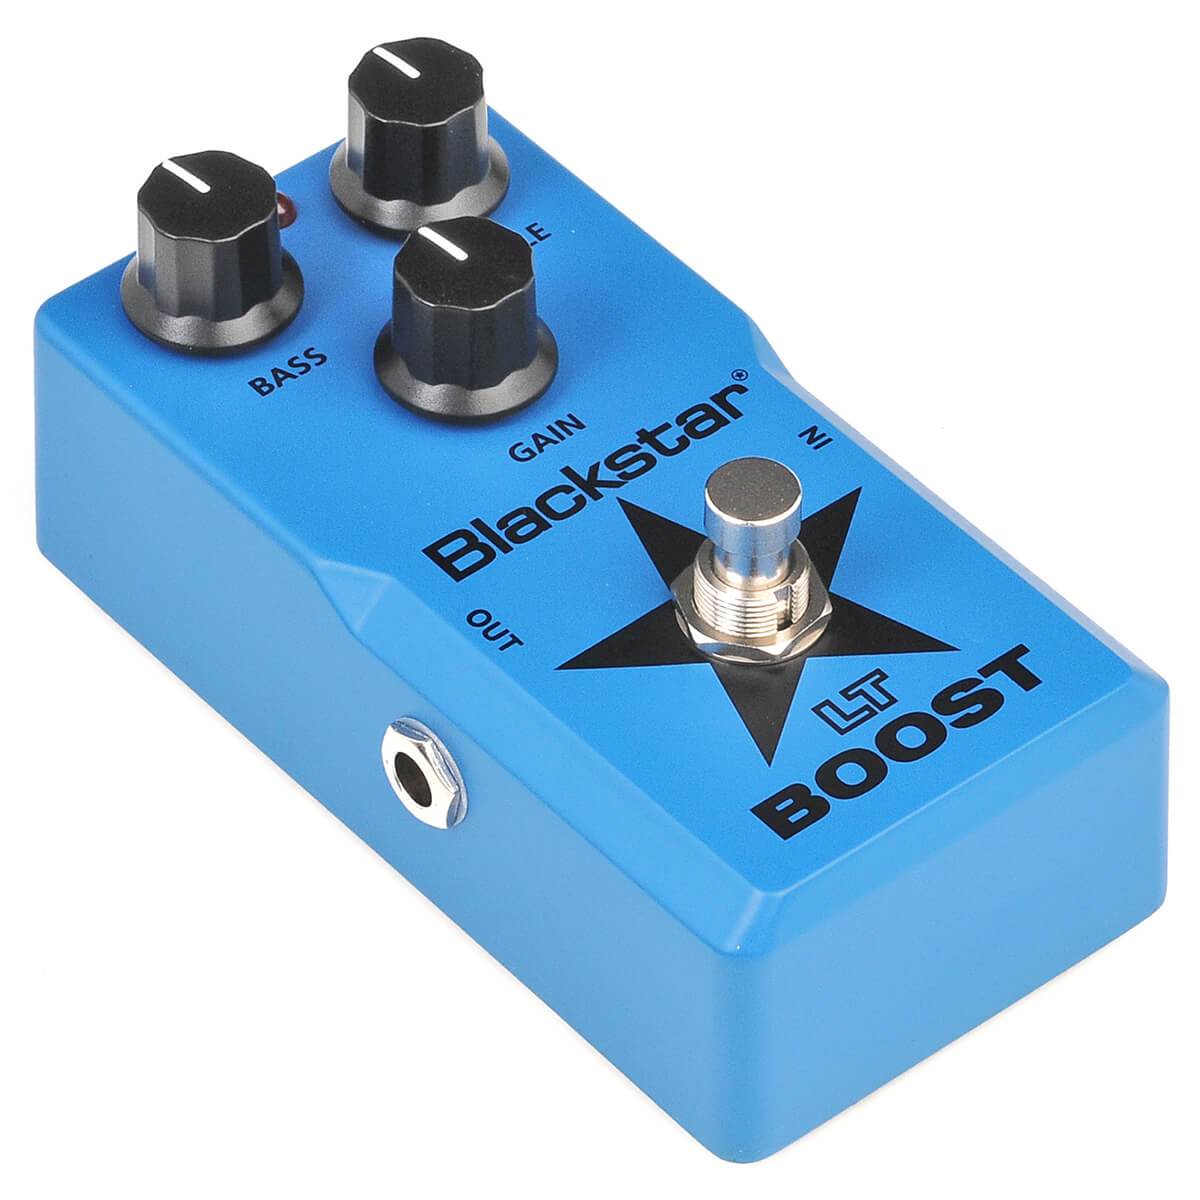 Blackstar LT Boost Guitar Effects Pedal